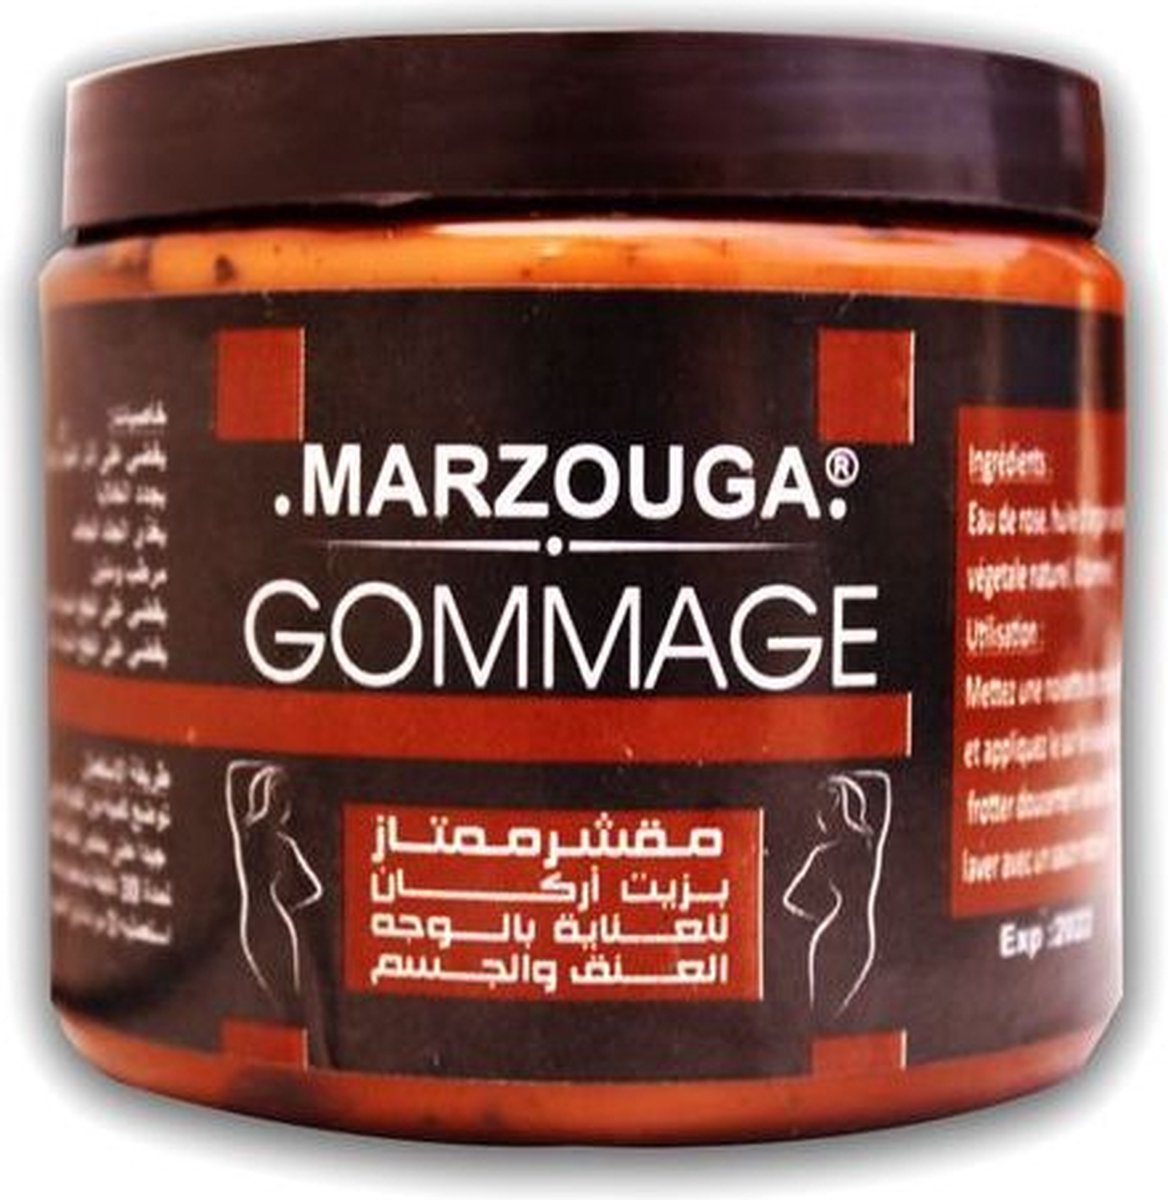 Marzouga Gommage